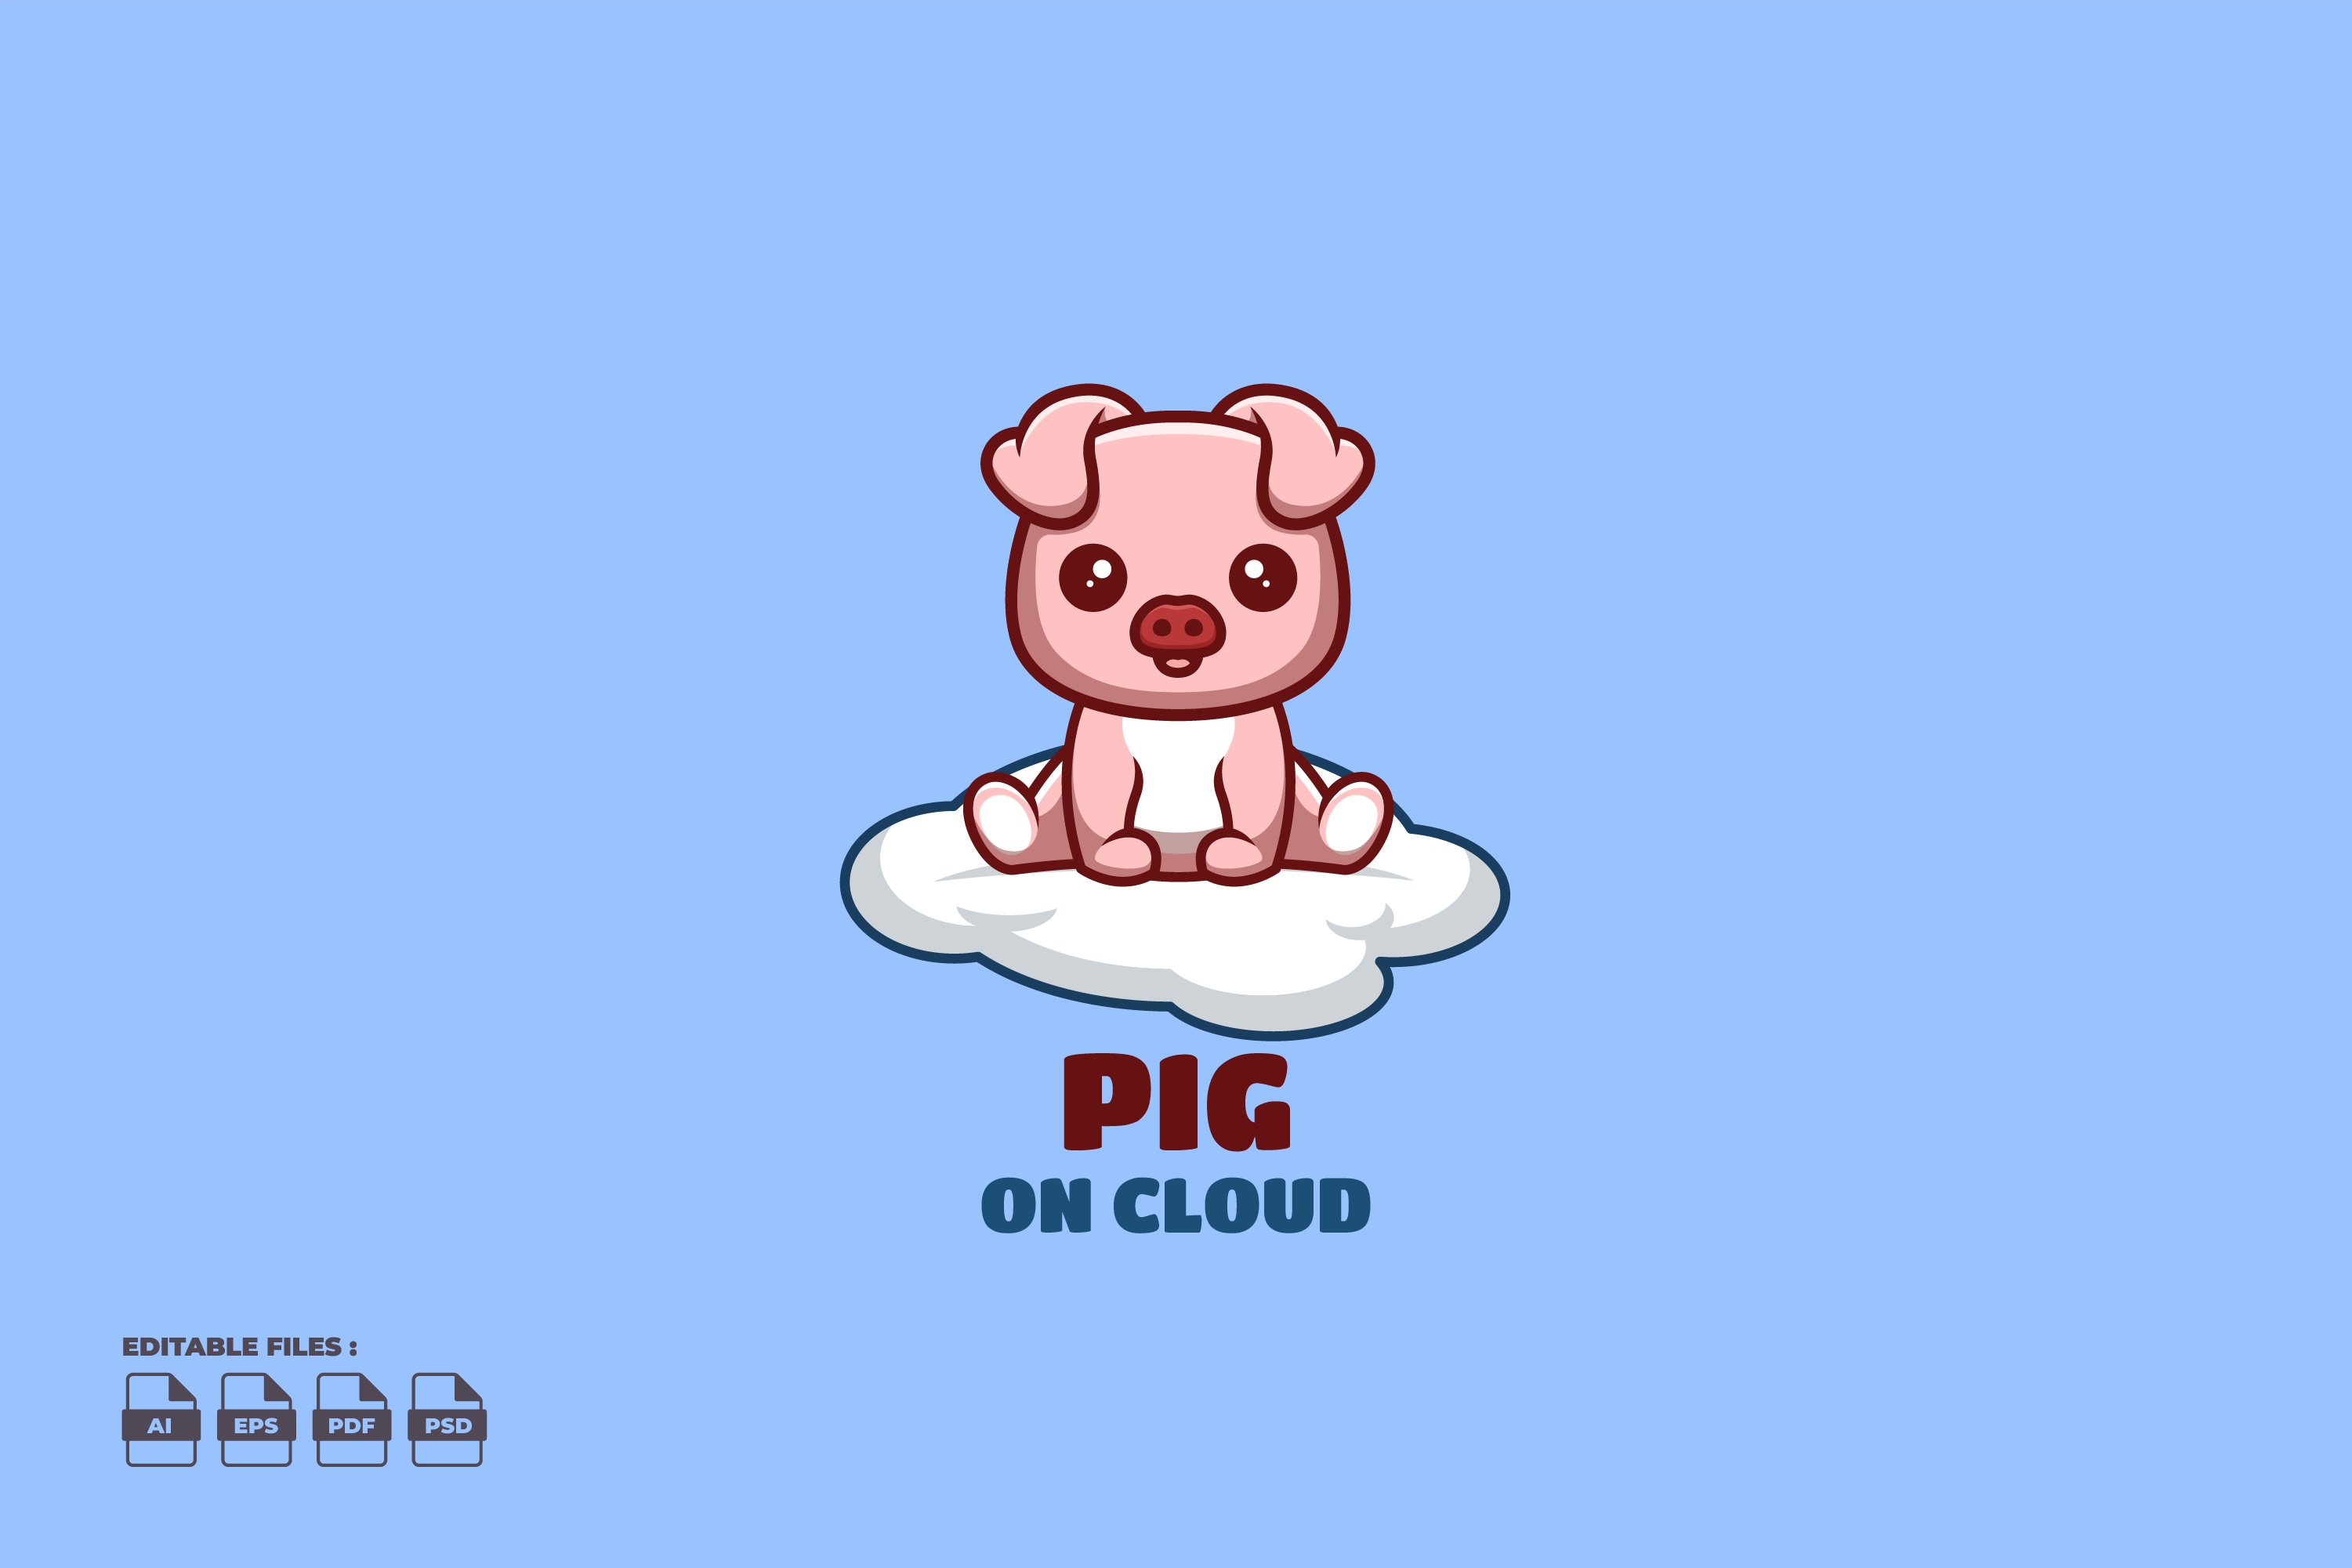 On Cloud Pig Cute Mascot Logo cover image.